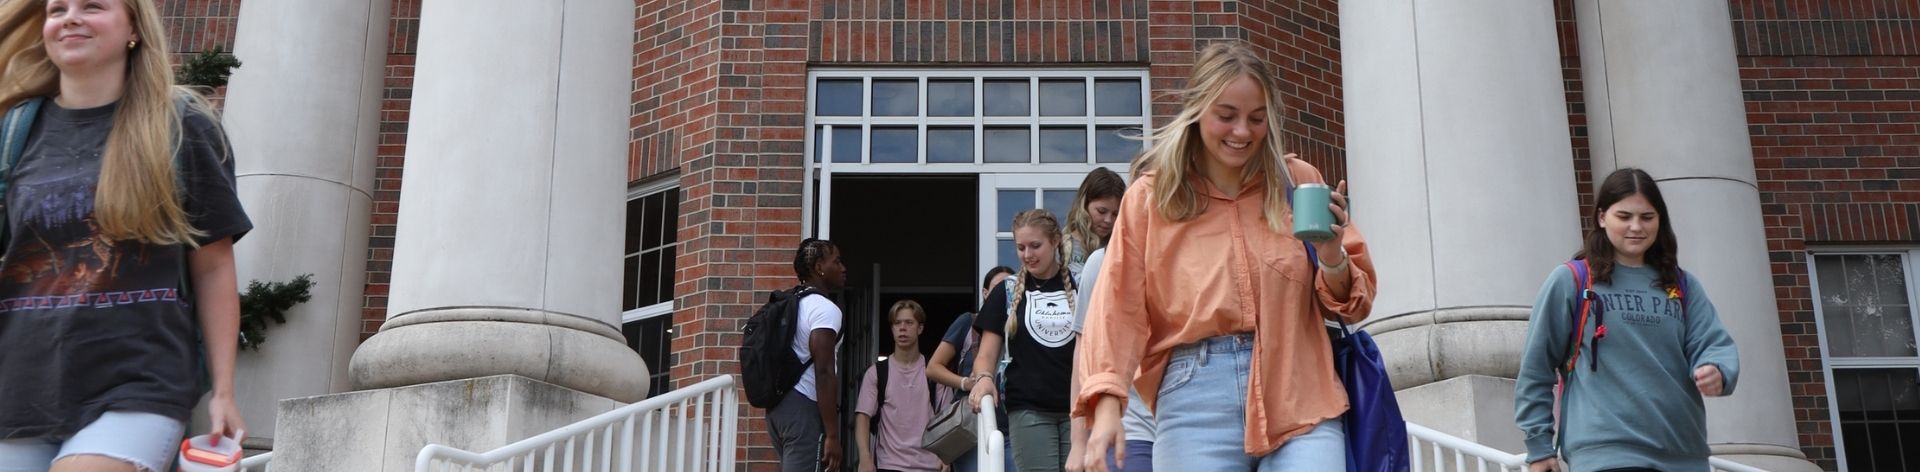 Students exiting a school building.